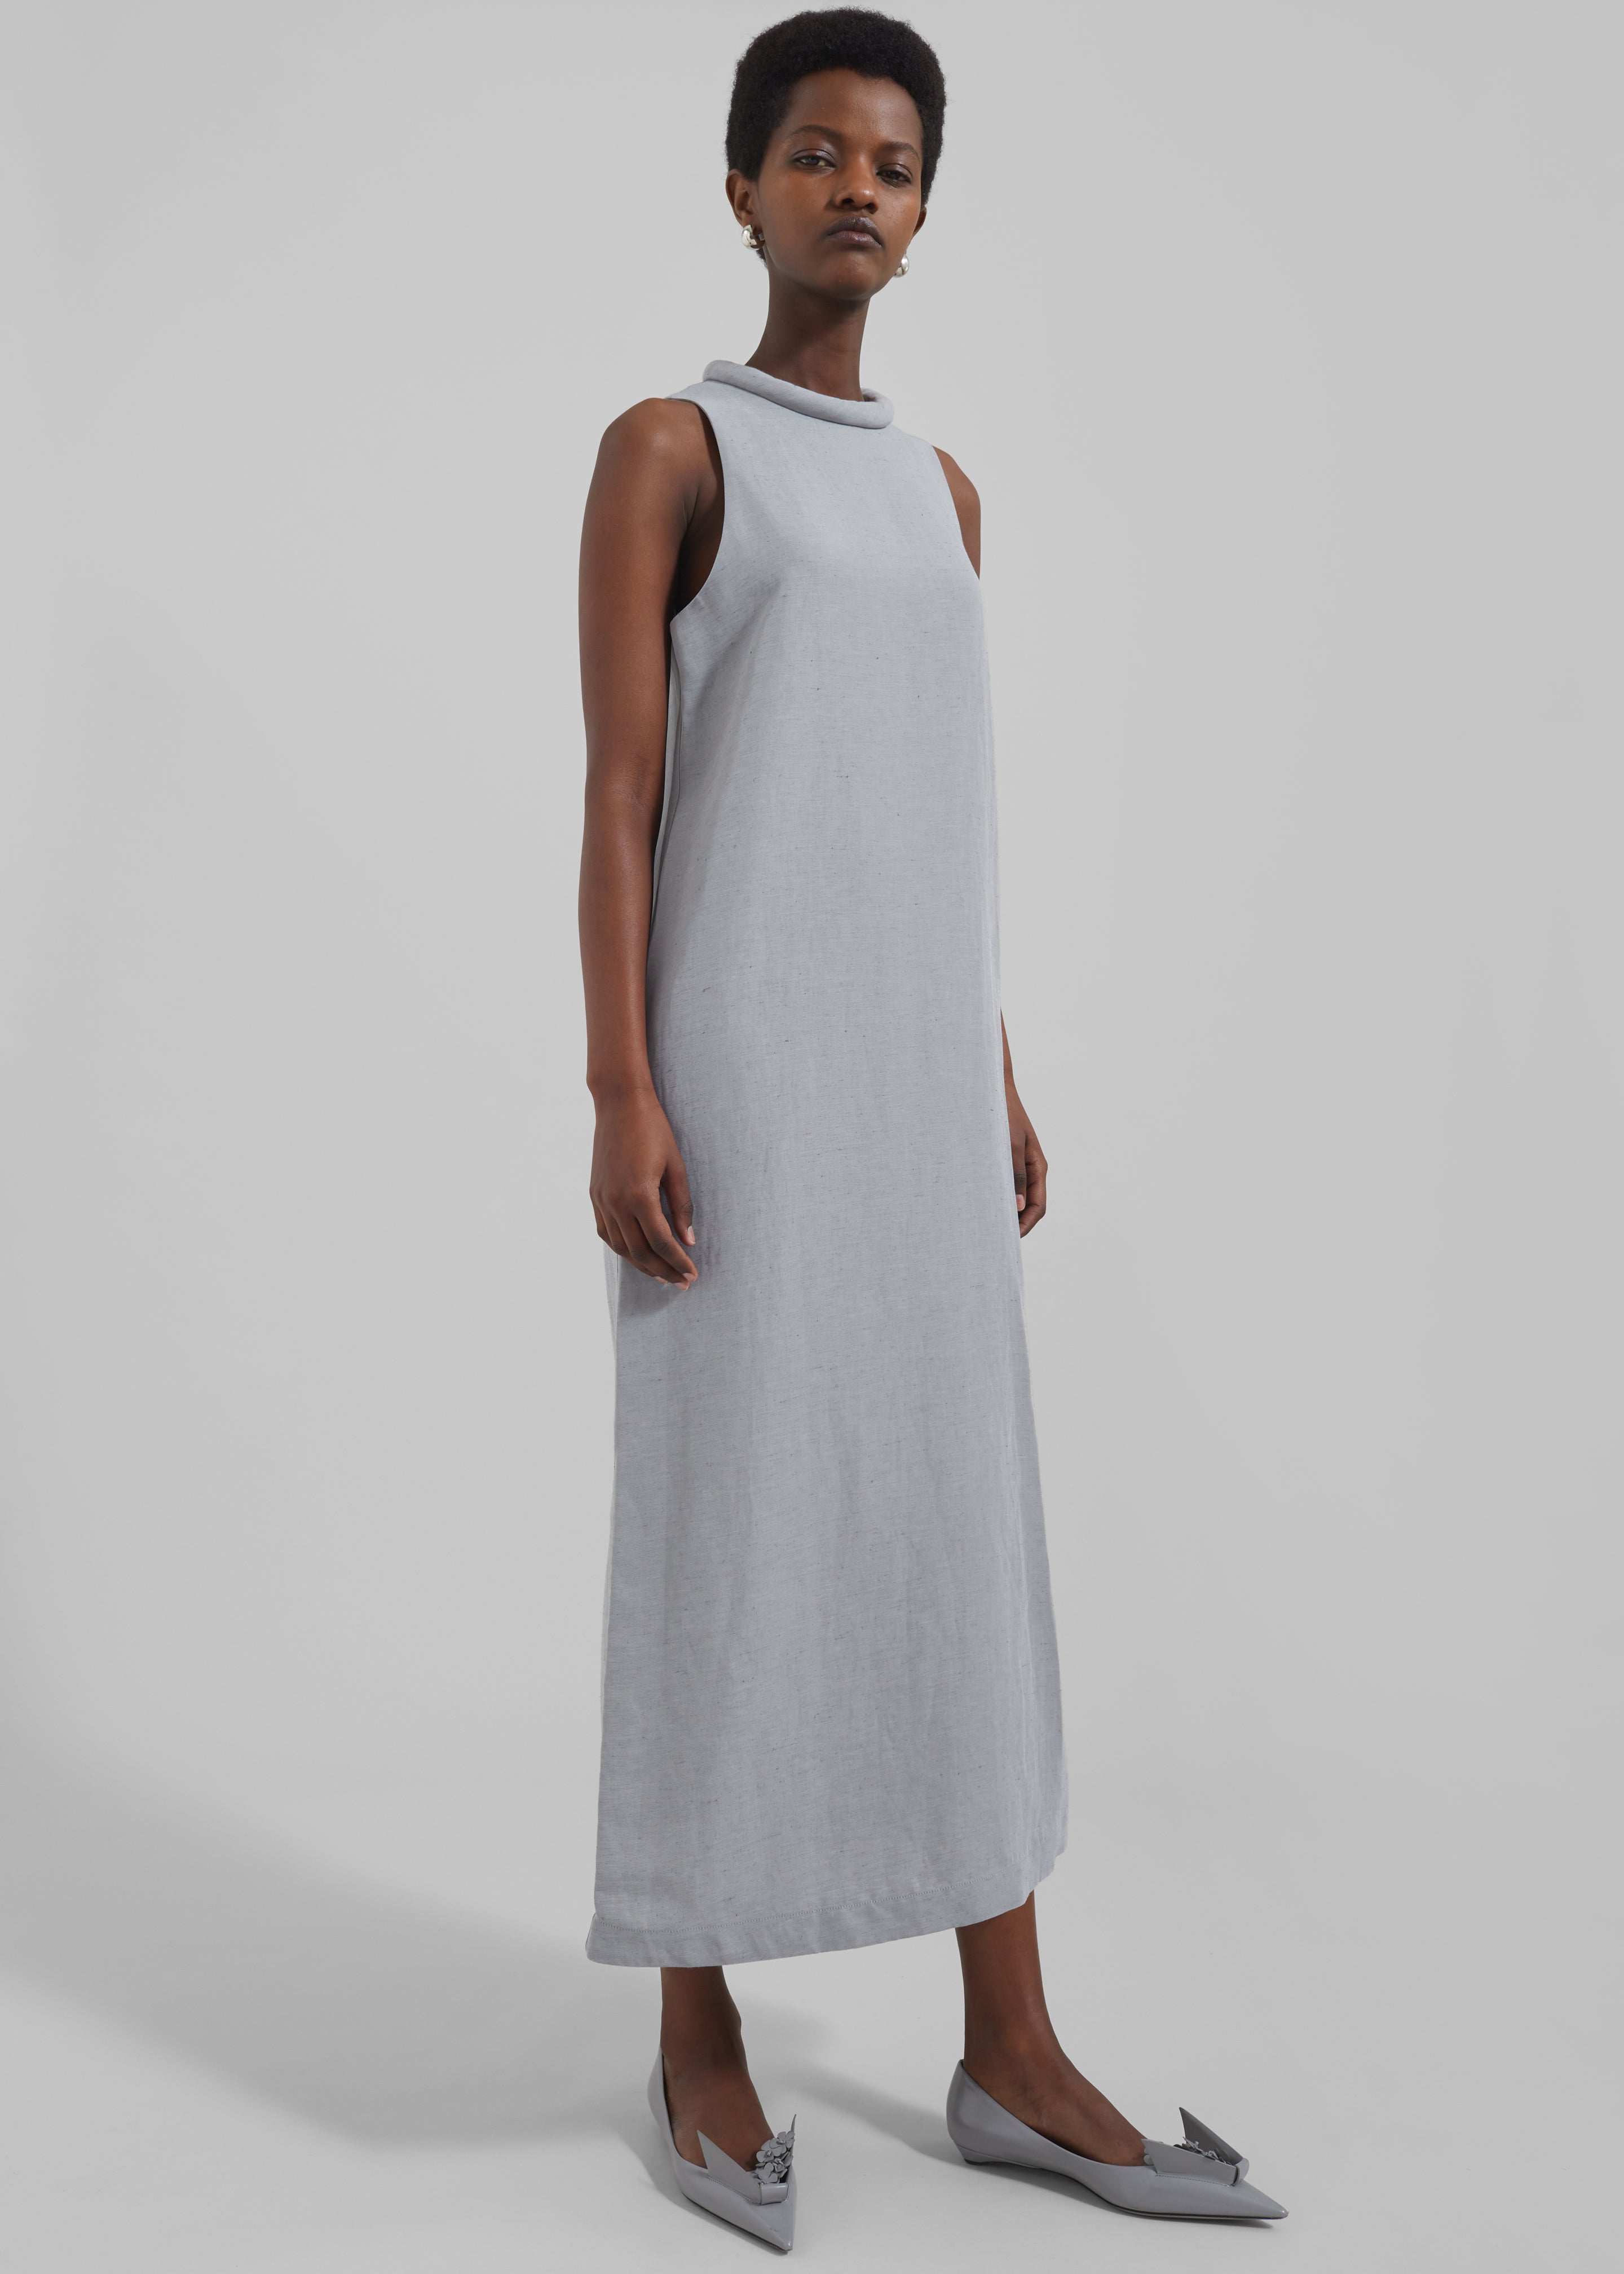 Loulou Studio Rivida Mixed Linen Dress - Pearl Grey Melange - 1